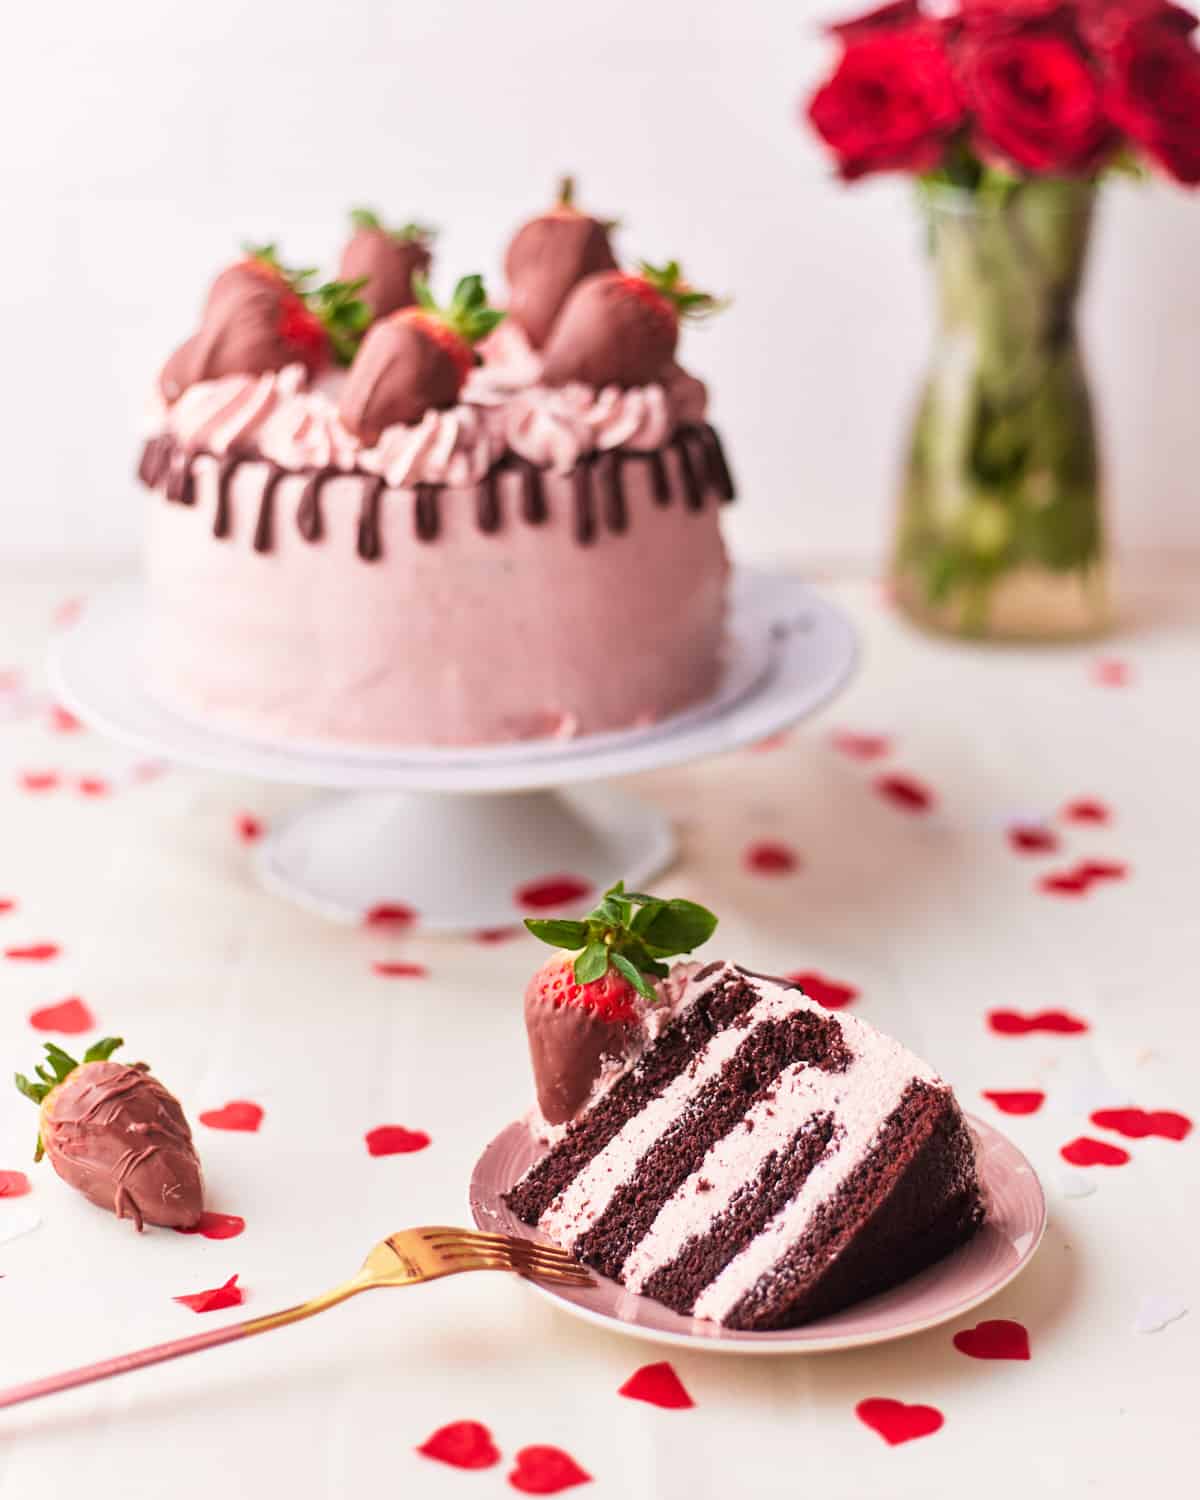 chocolate strawberry cake with chocolate drip and chocolate covered strawberries.